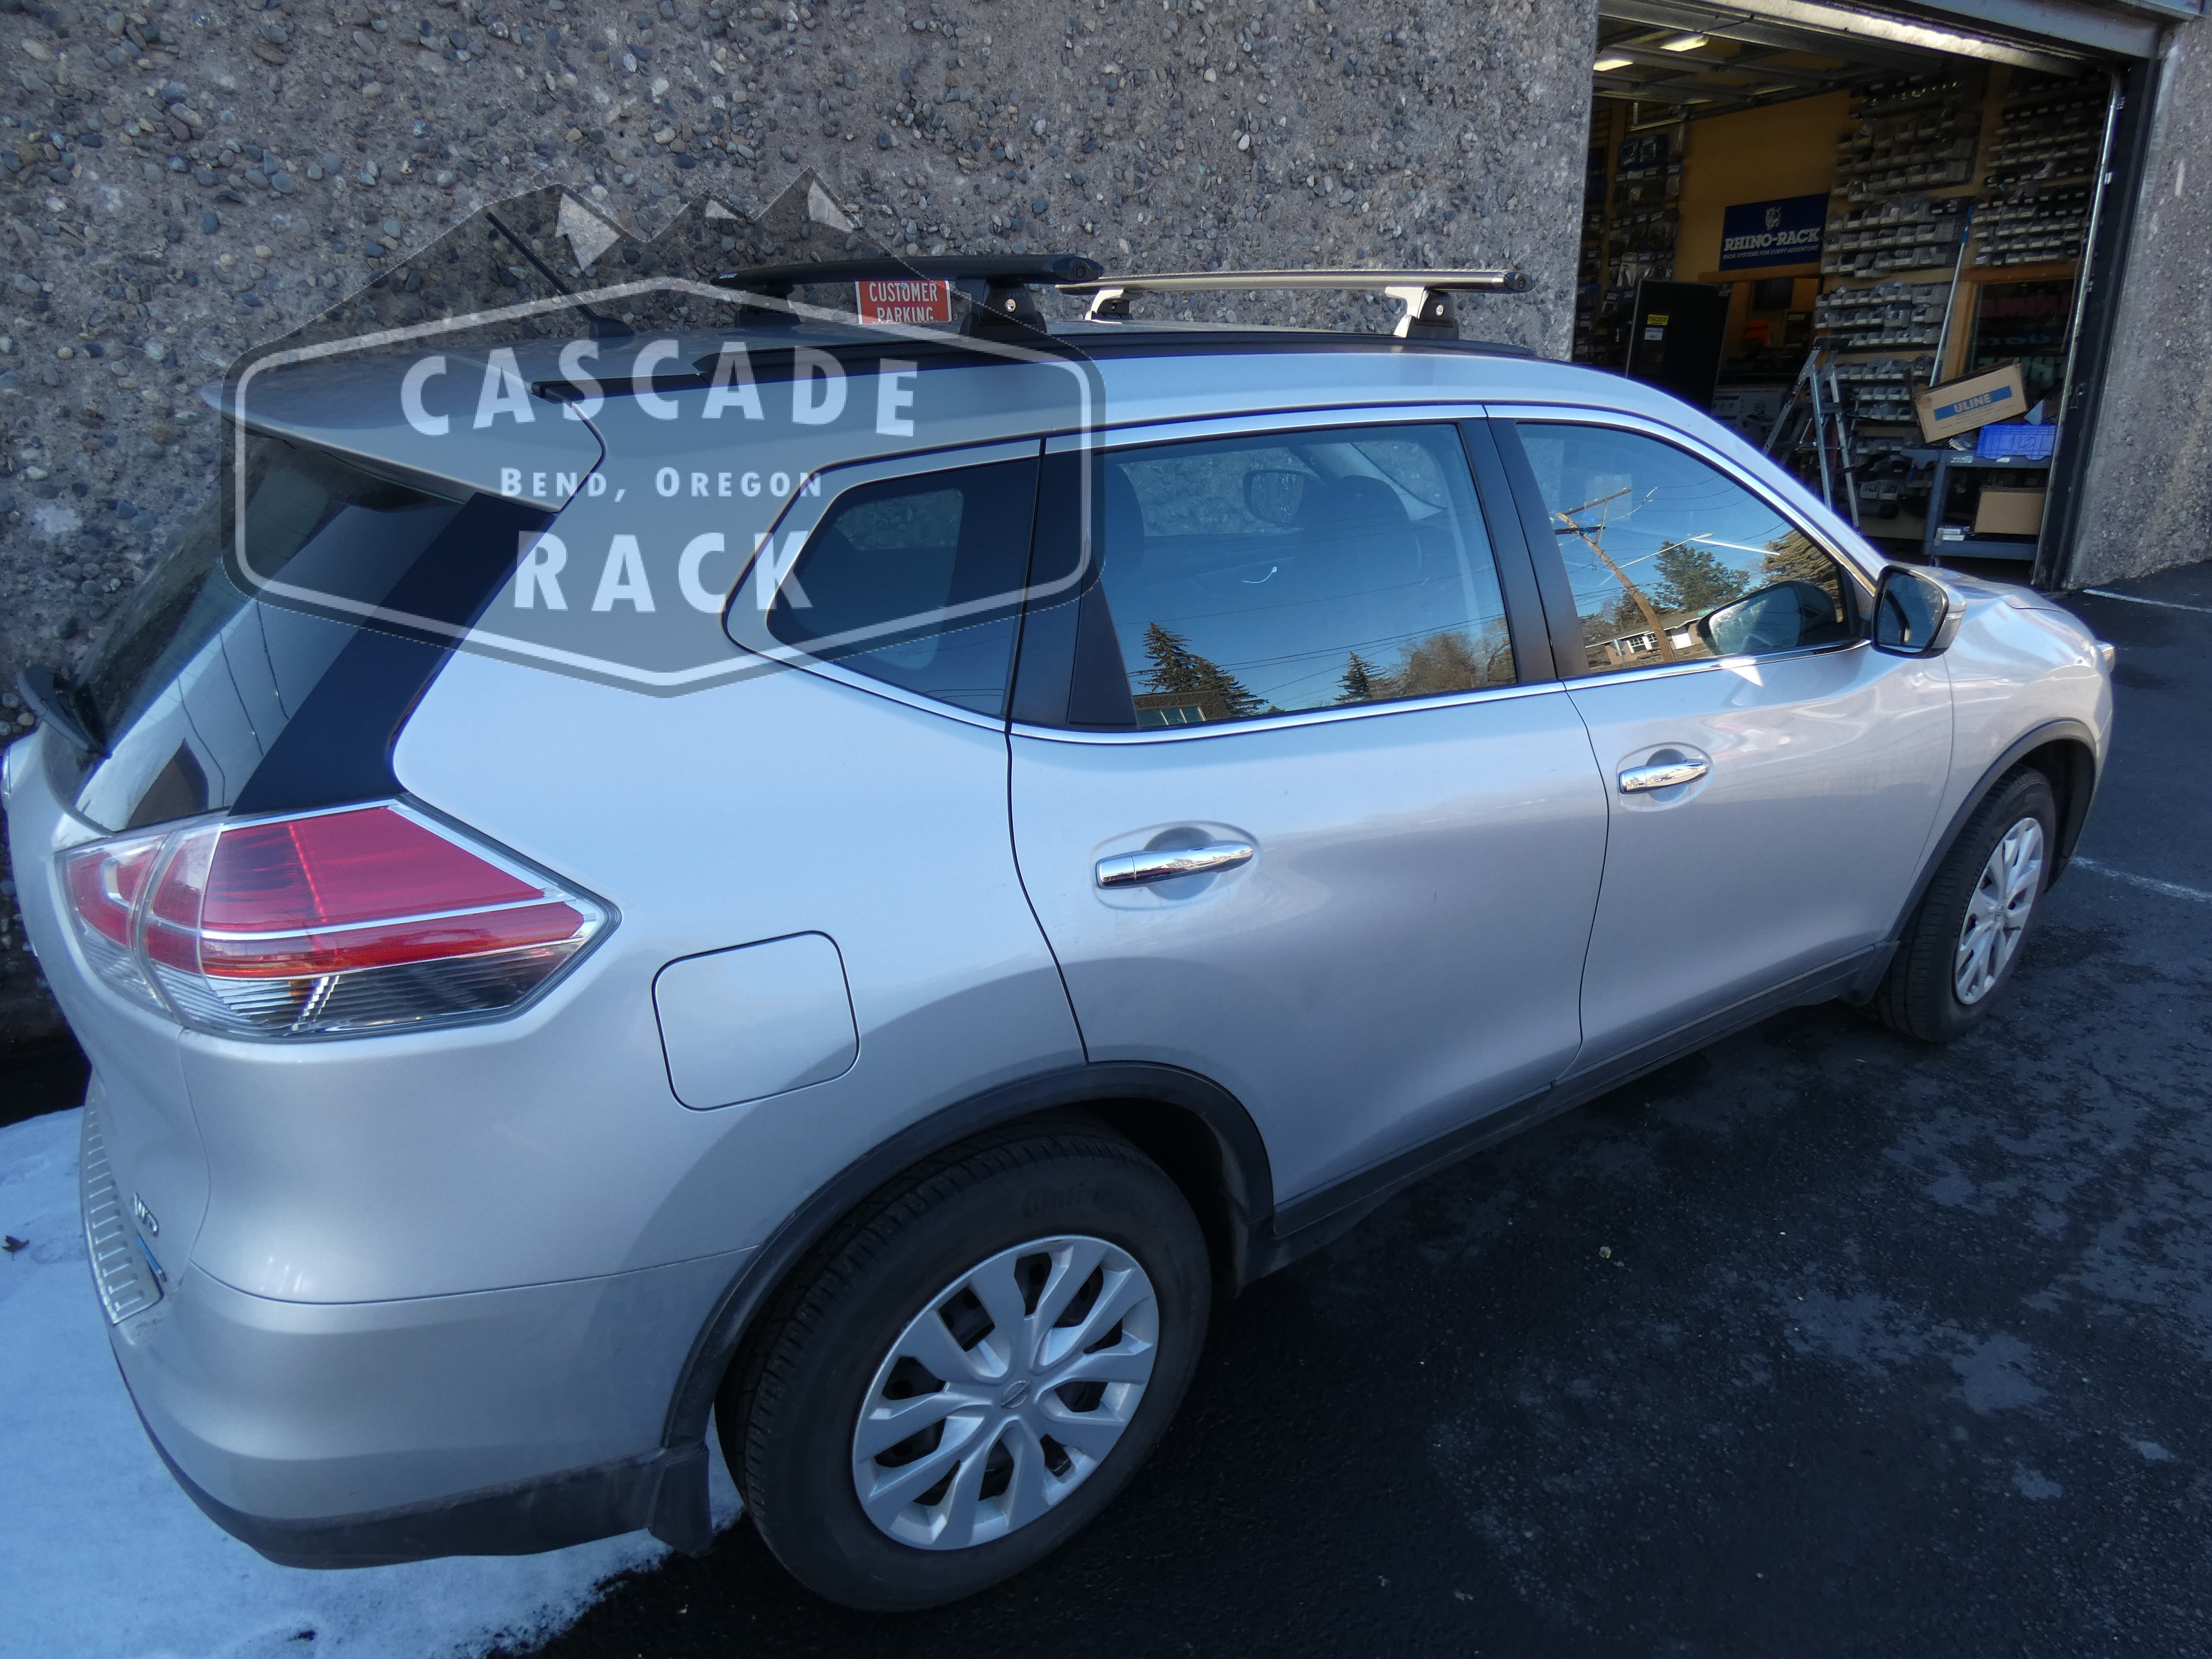 2014 Nissan Rogue - Custom Base Rack System - Rhino Rack / Thule